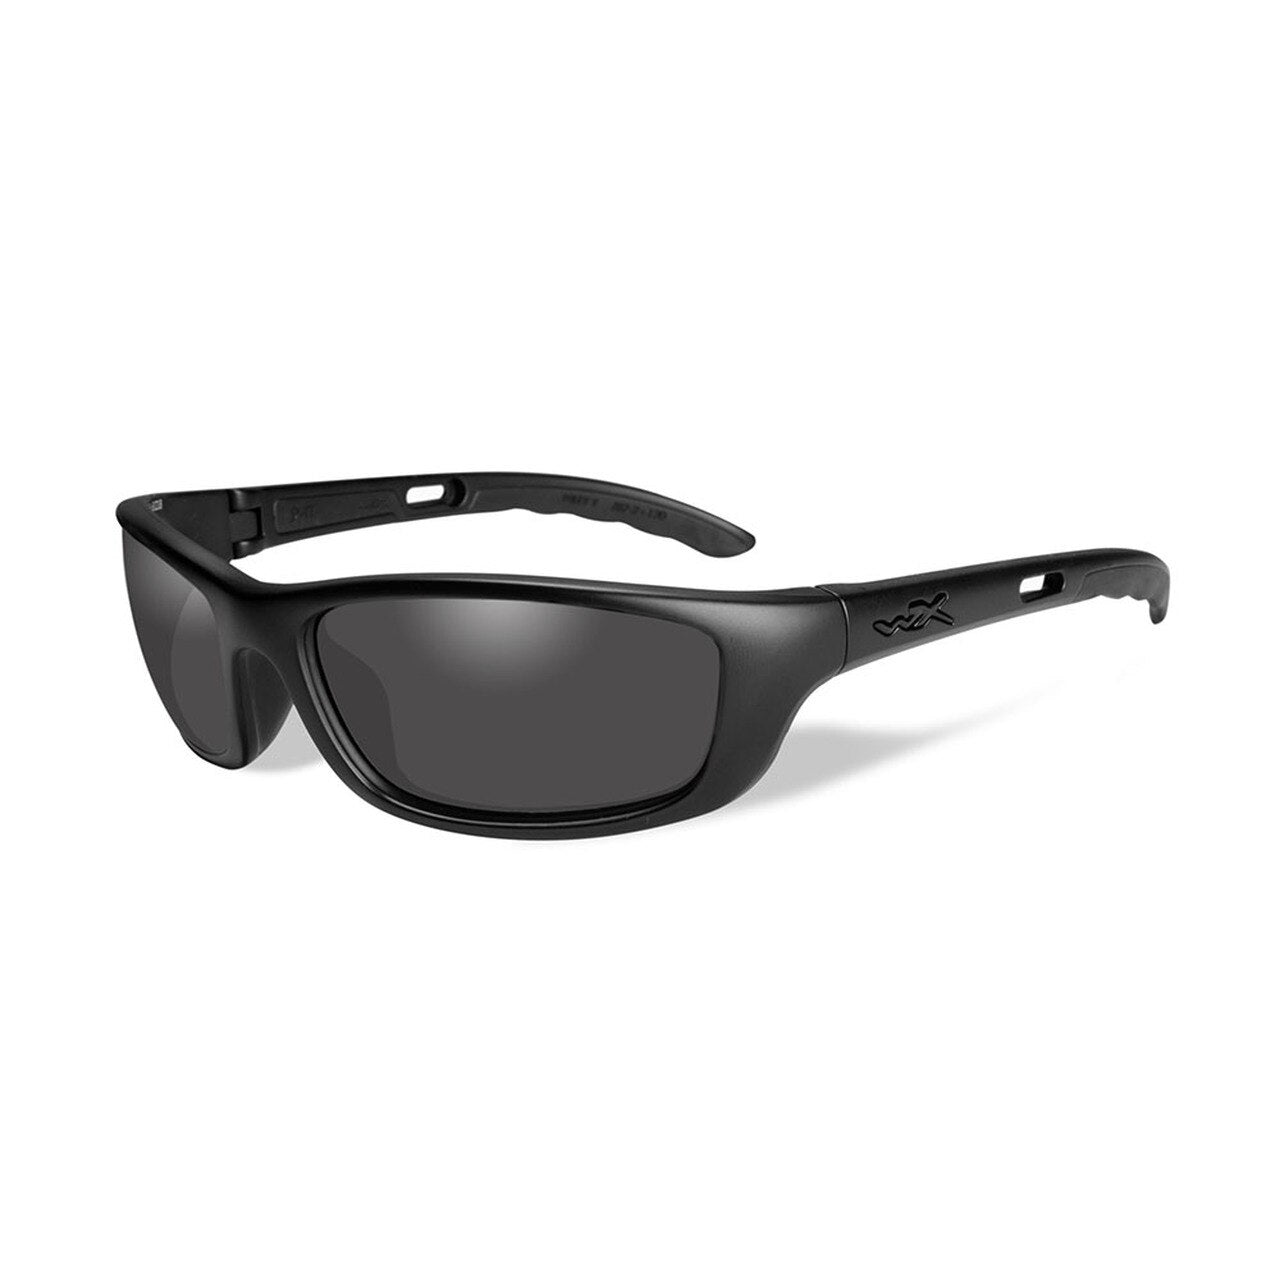 Wiley X P17M Sunglasses Smoke Grey Lens Matte Black Frame Tactical Distributors Ltd New Zealand